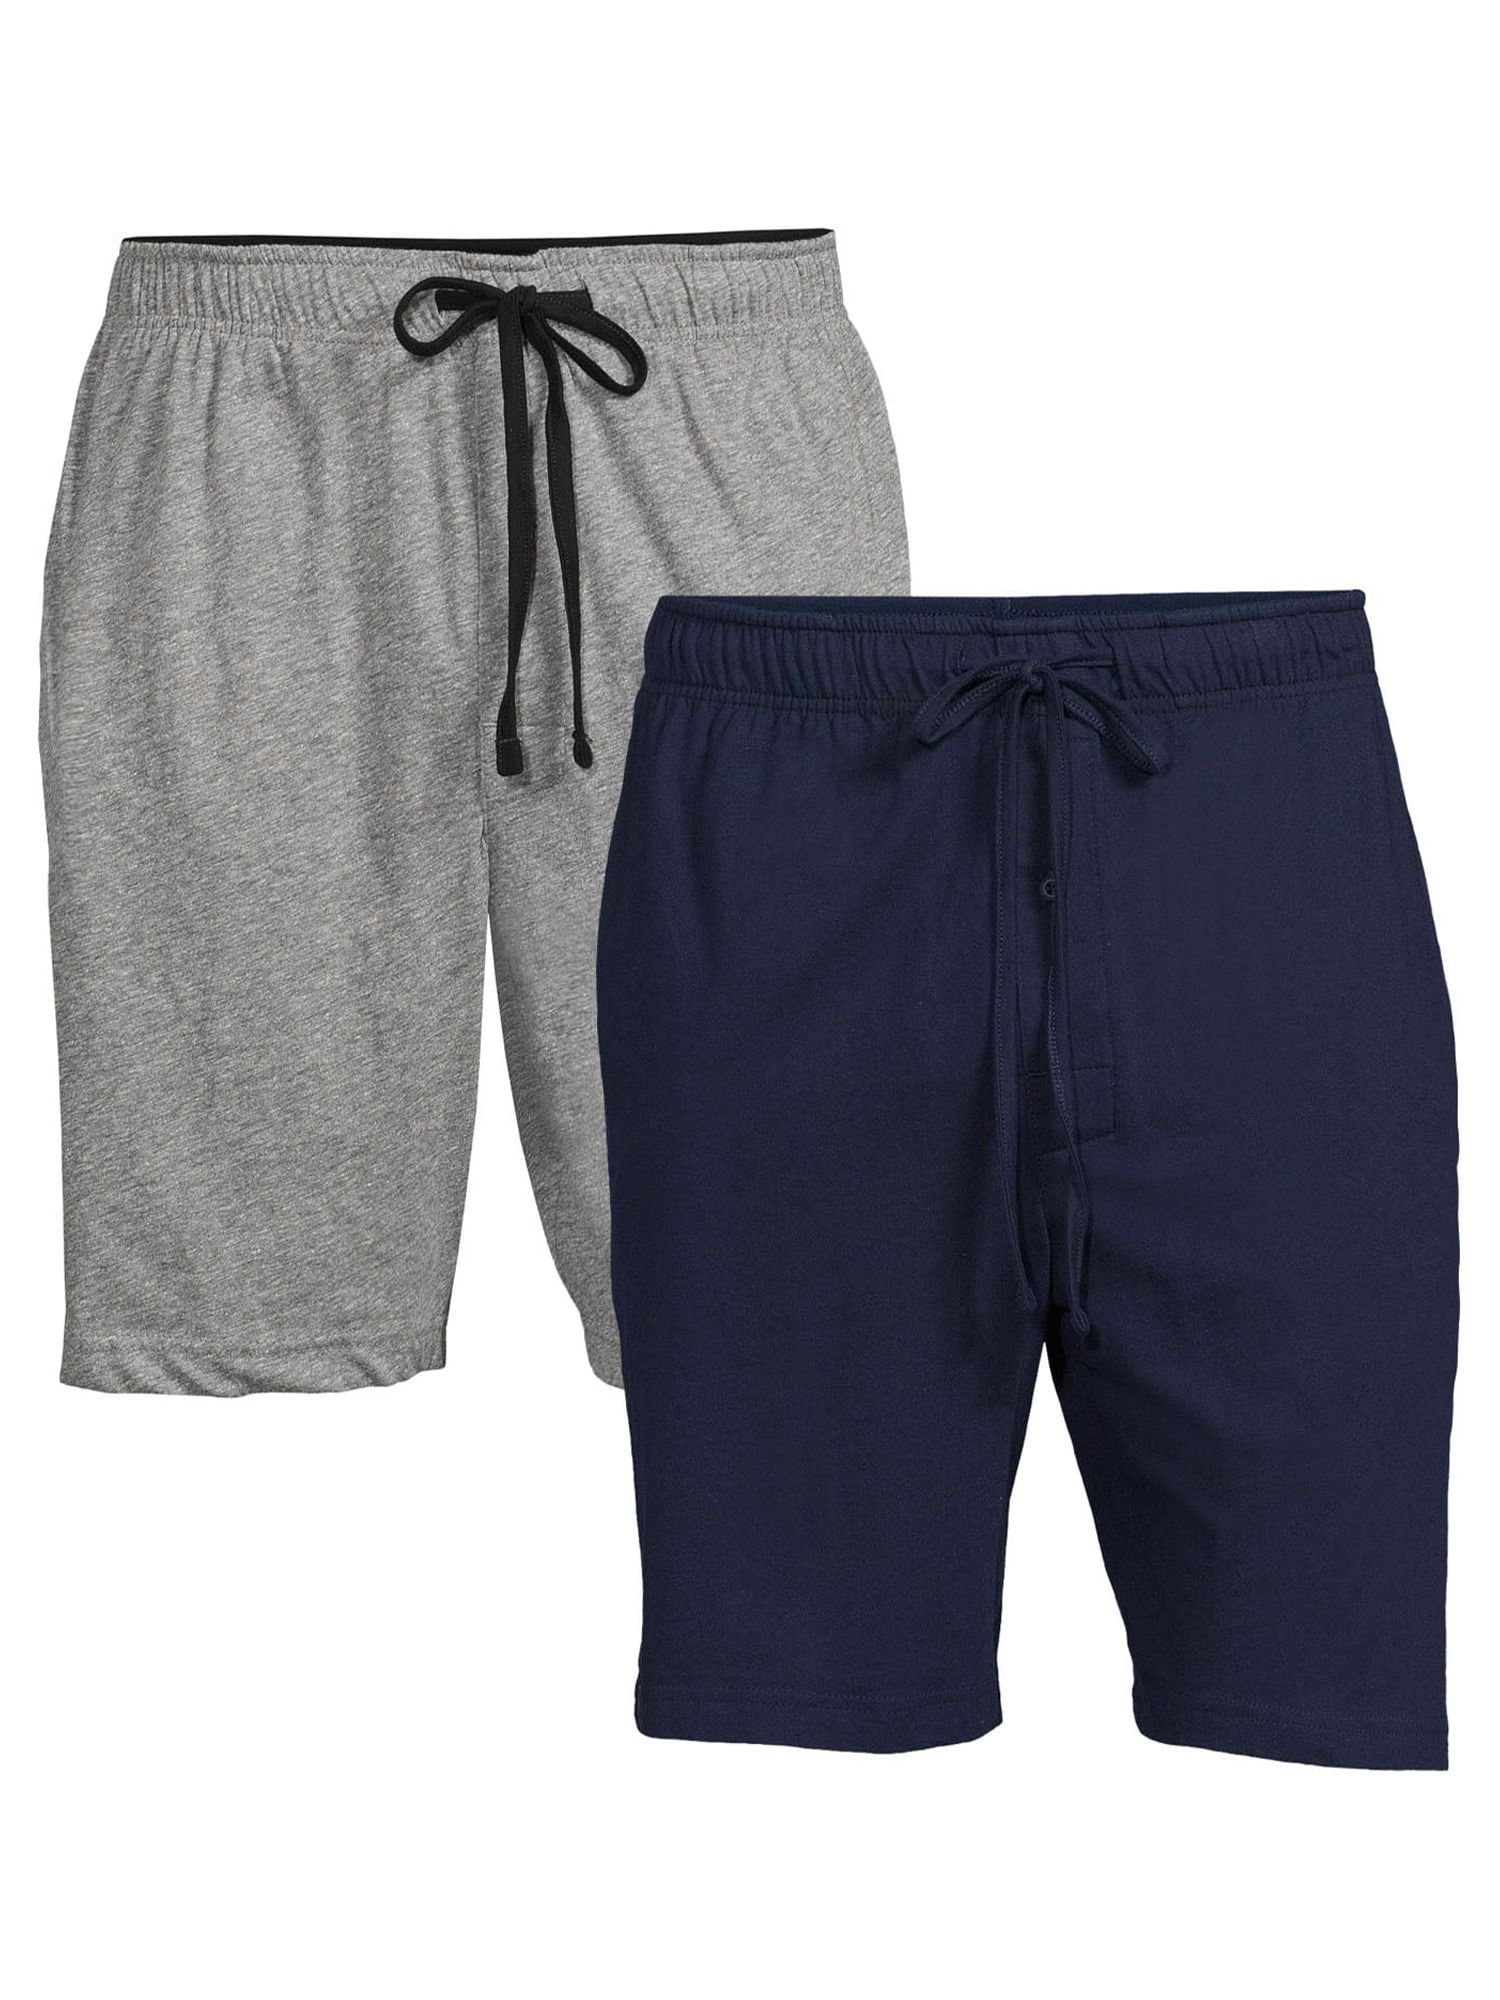 George Men's Solid Knit Pajama Shorts, 2-Pack - Walmart.com